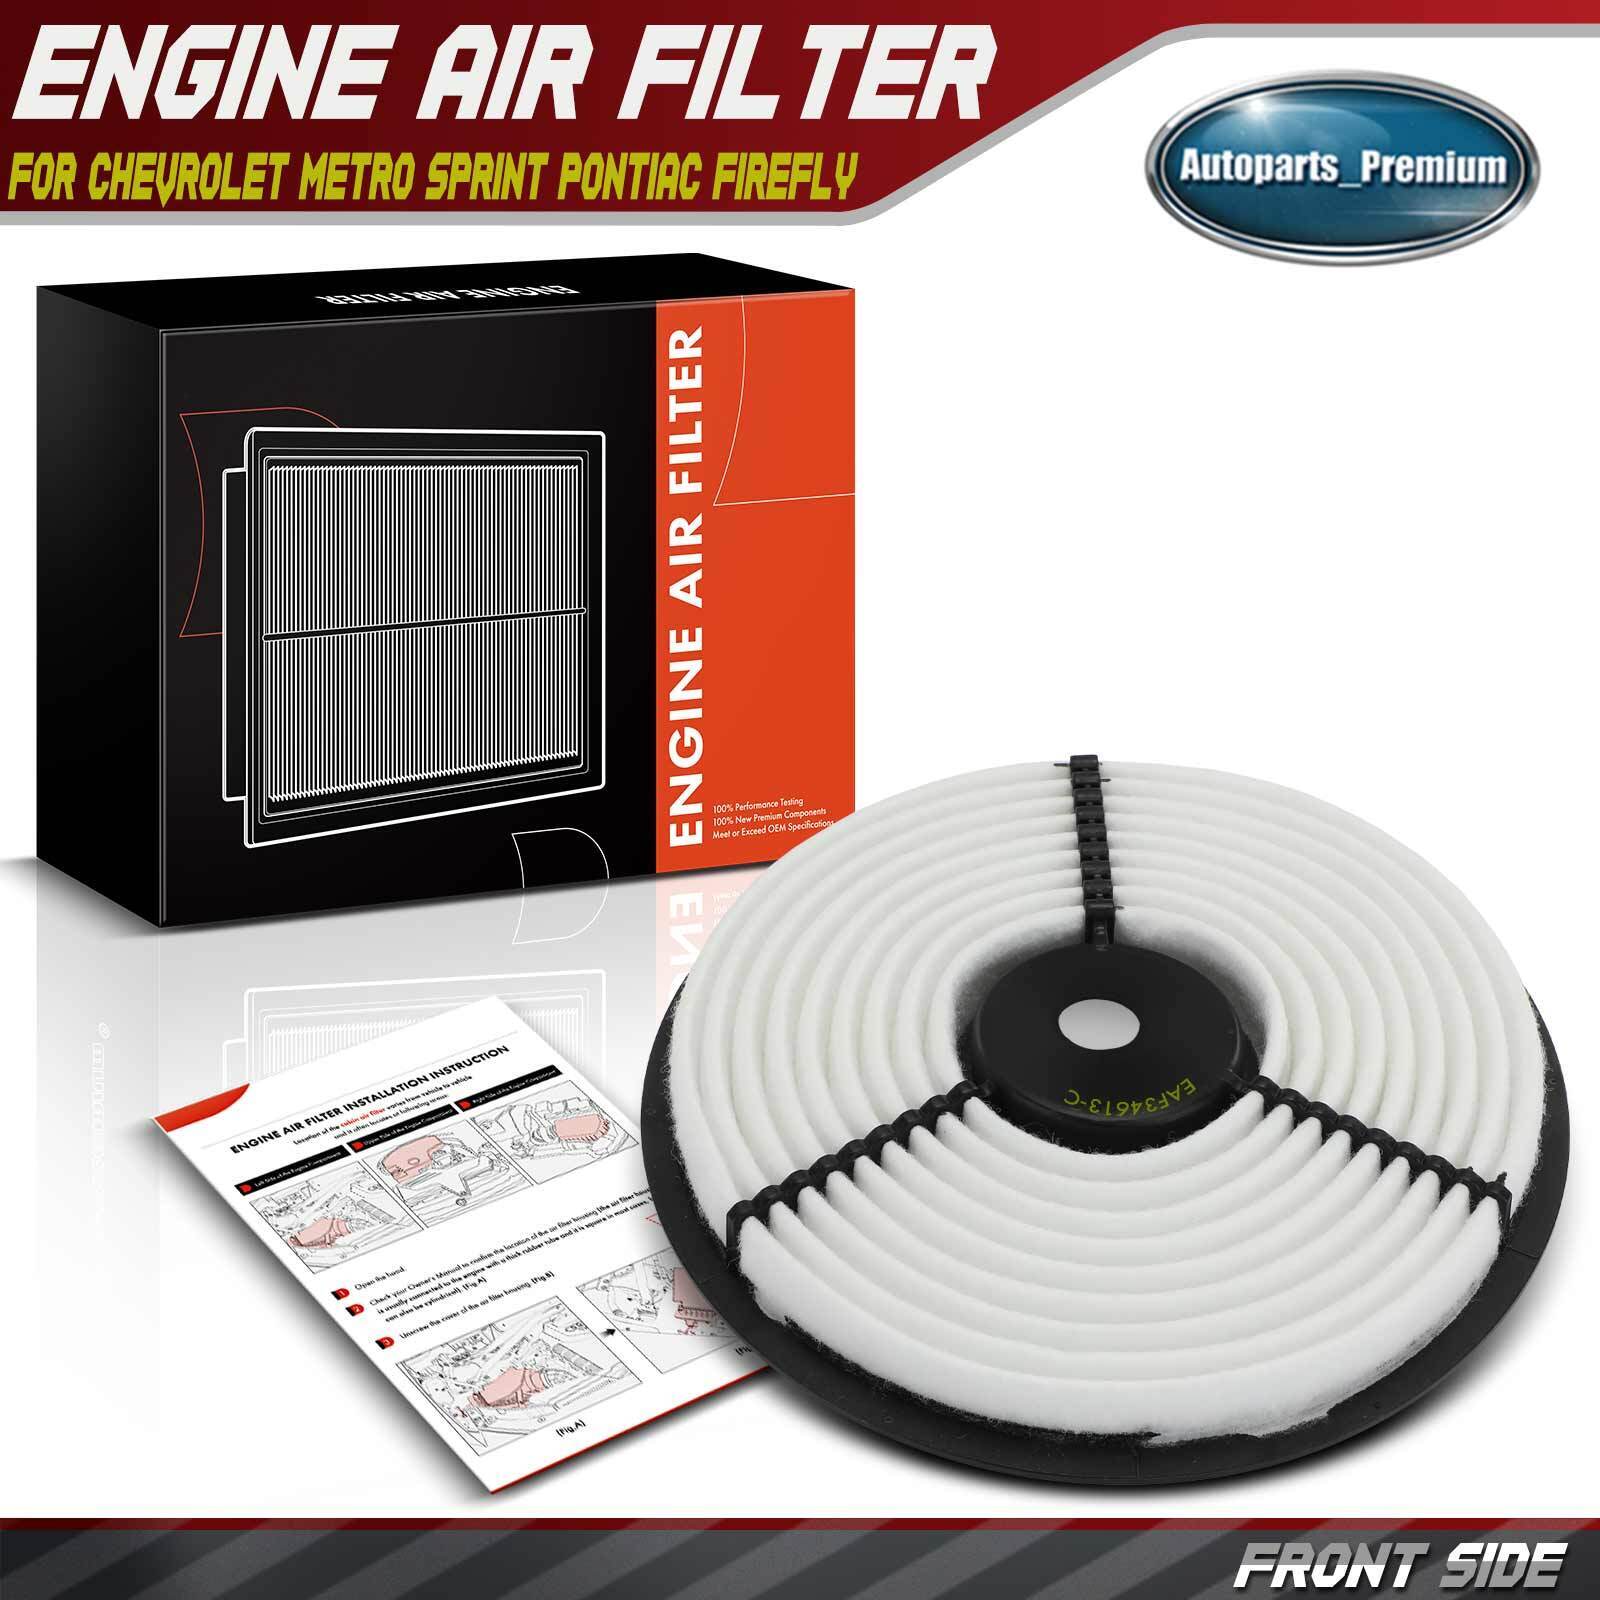 Engine Air Filter for Chevrolet Metro Sprint Pontiac Firefly Suzuki Swift Forsa